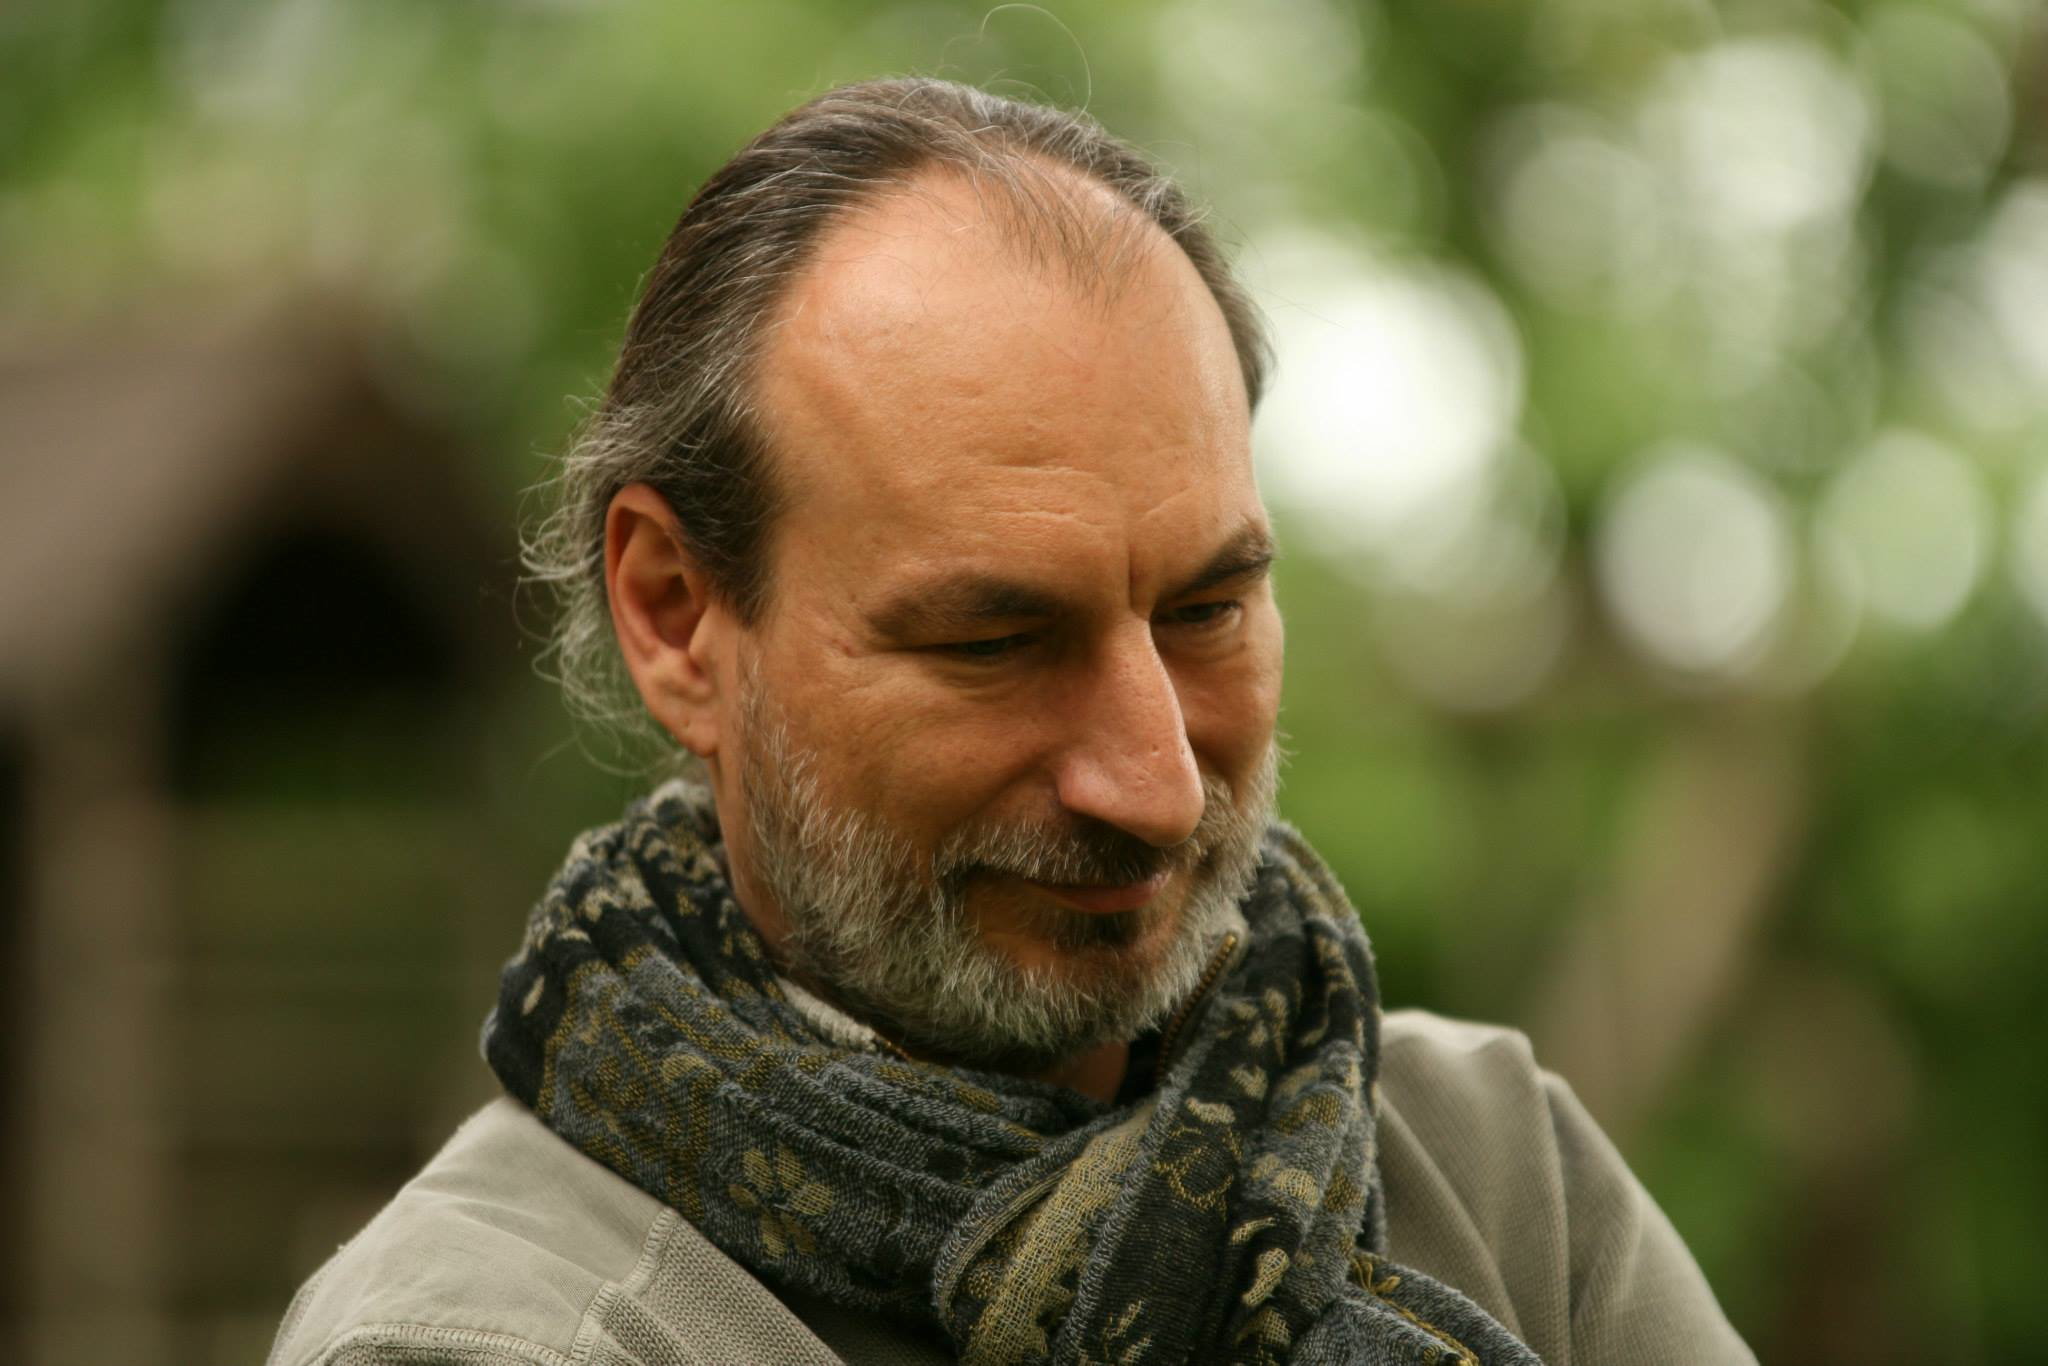 Frédéricq Bianchet producer/director